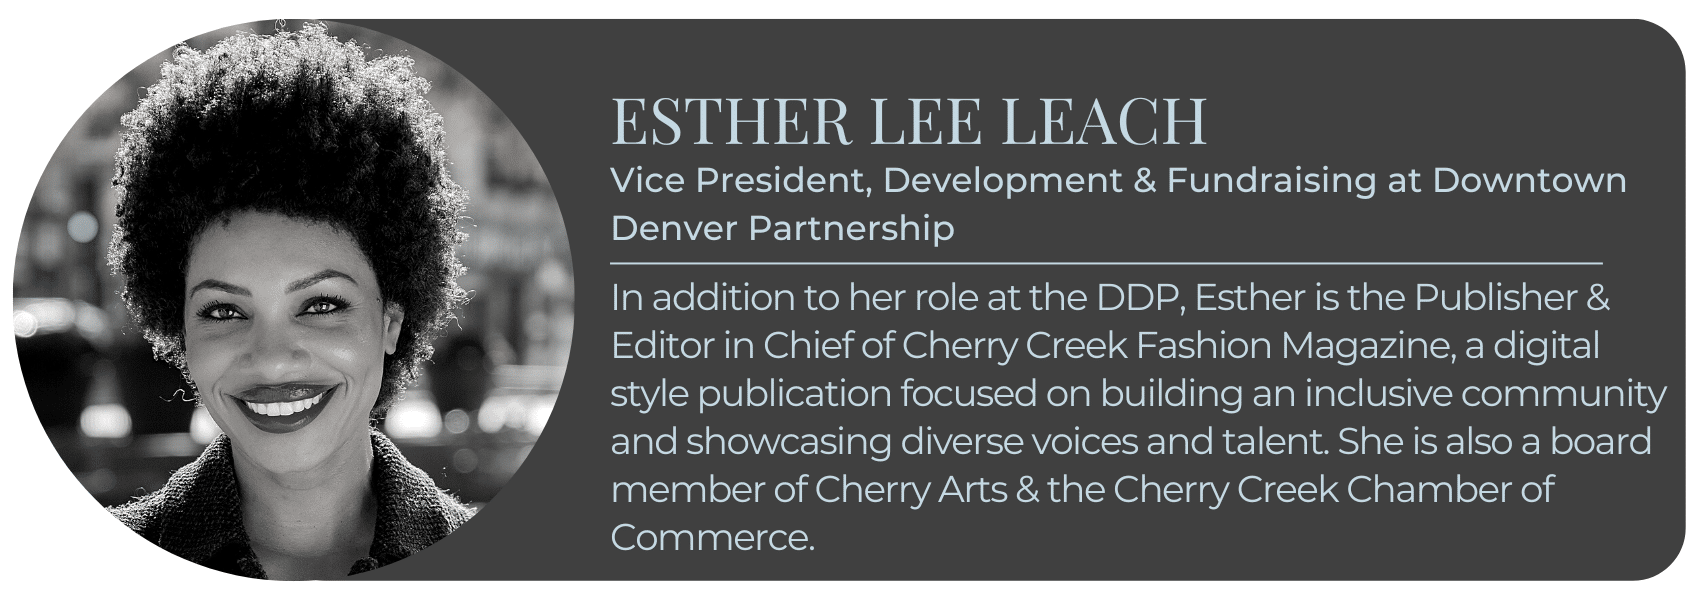 Esther Lee Leach